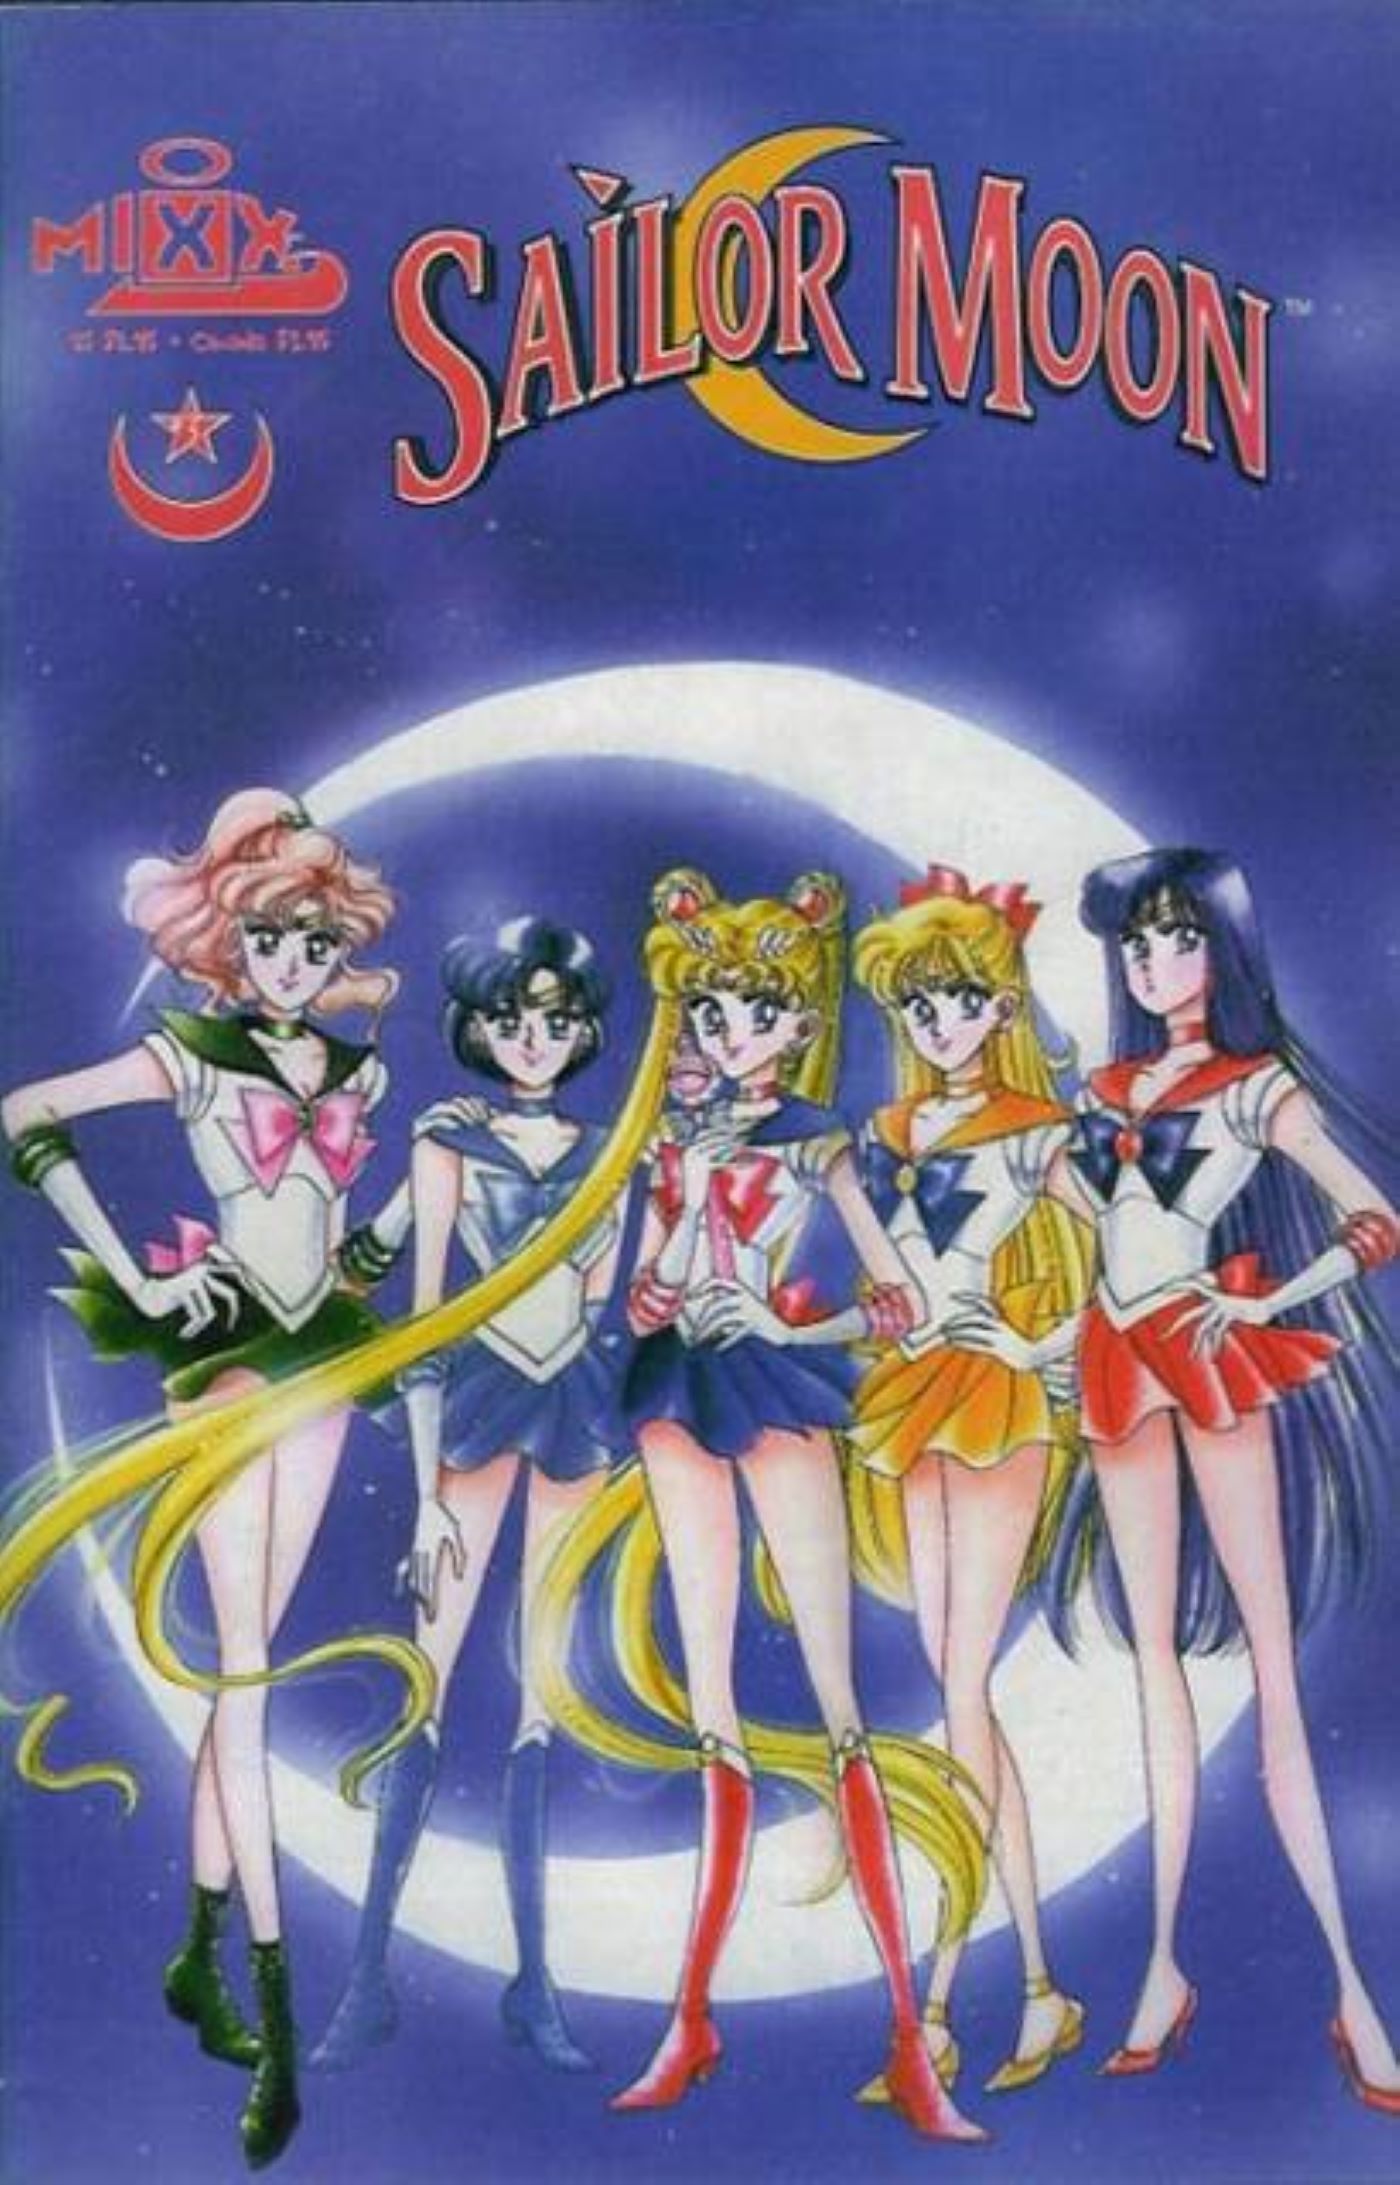 Sailor Moon - Capa 3 retratando as Sailor Scouts juntas com uma lua crescente estilizada atrás delas.